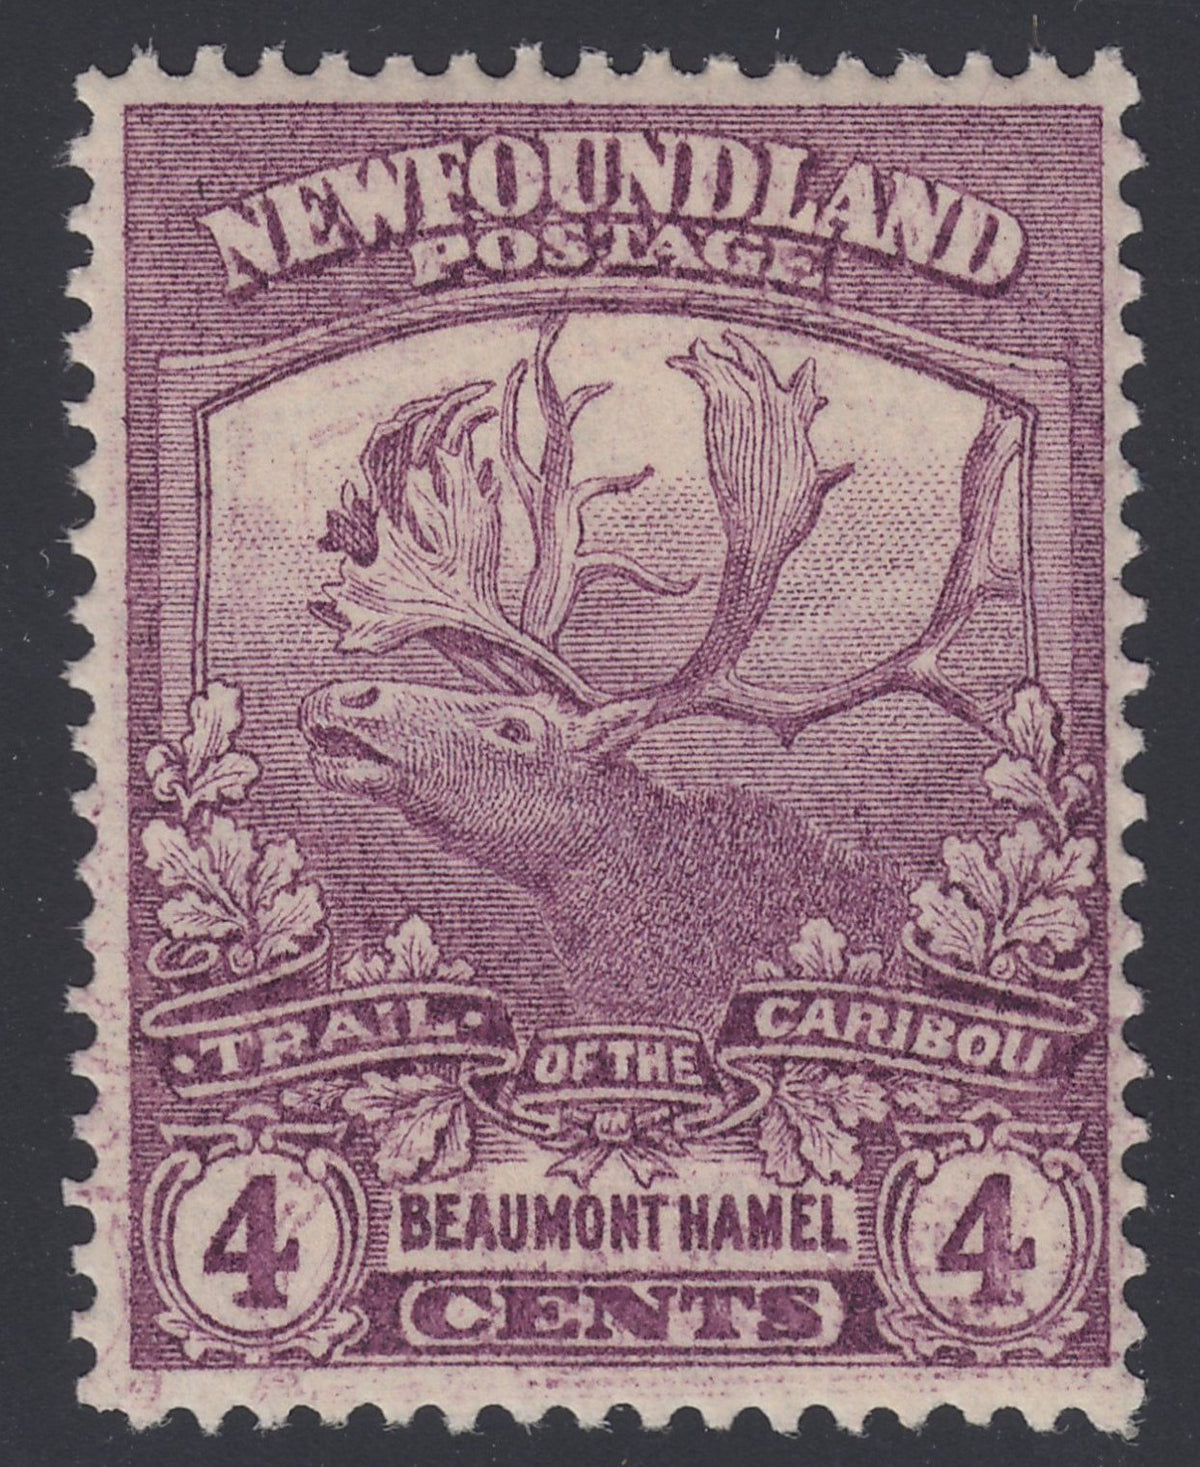 0118NF1810 - Newfoundland #118 - Mint, STRONG KISS PRINT